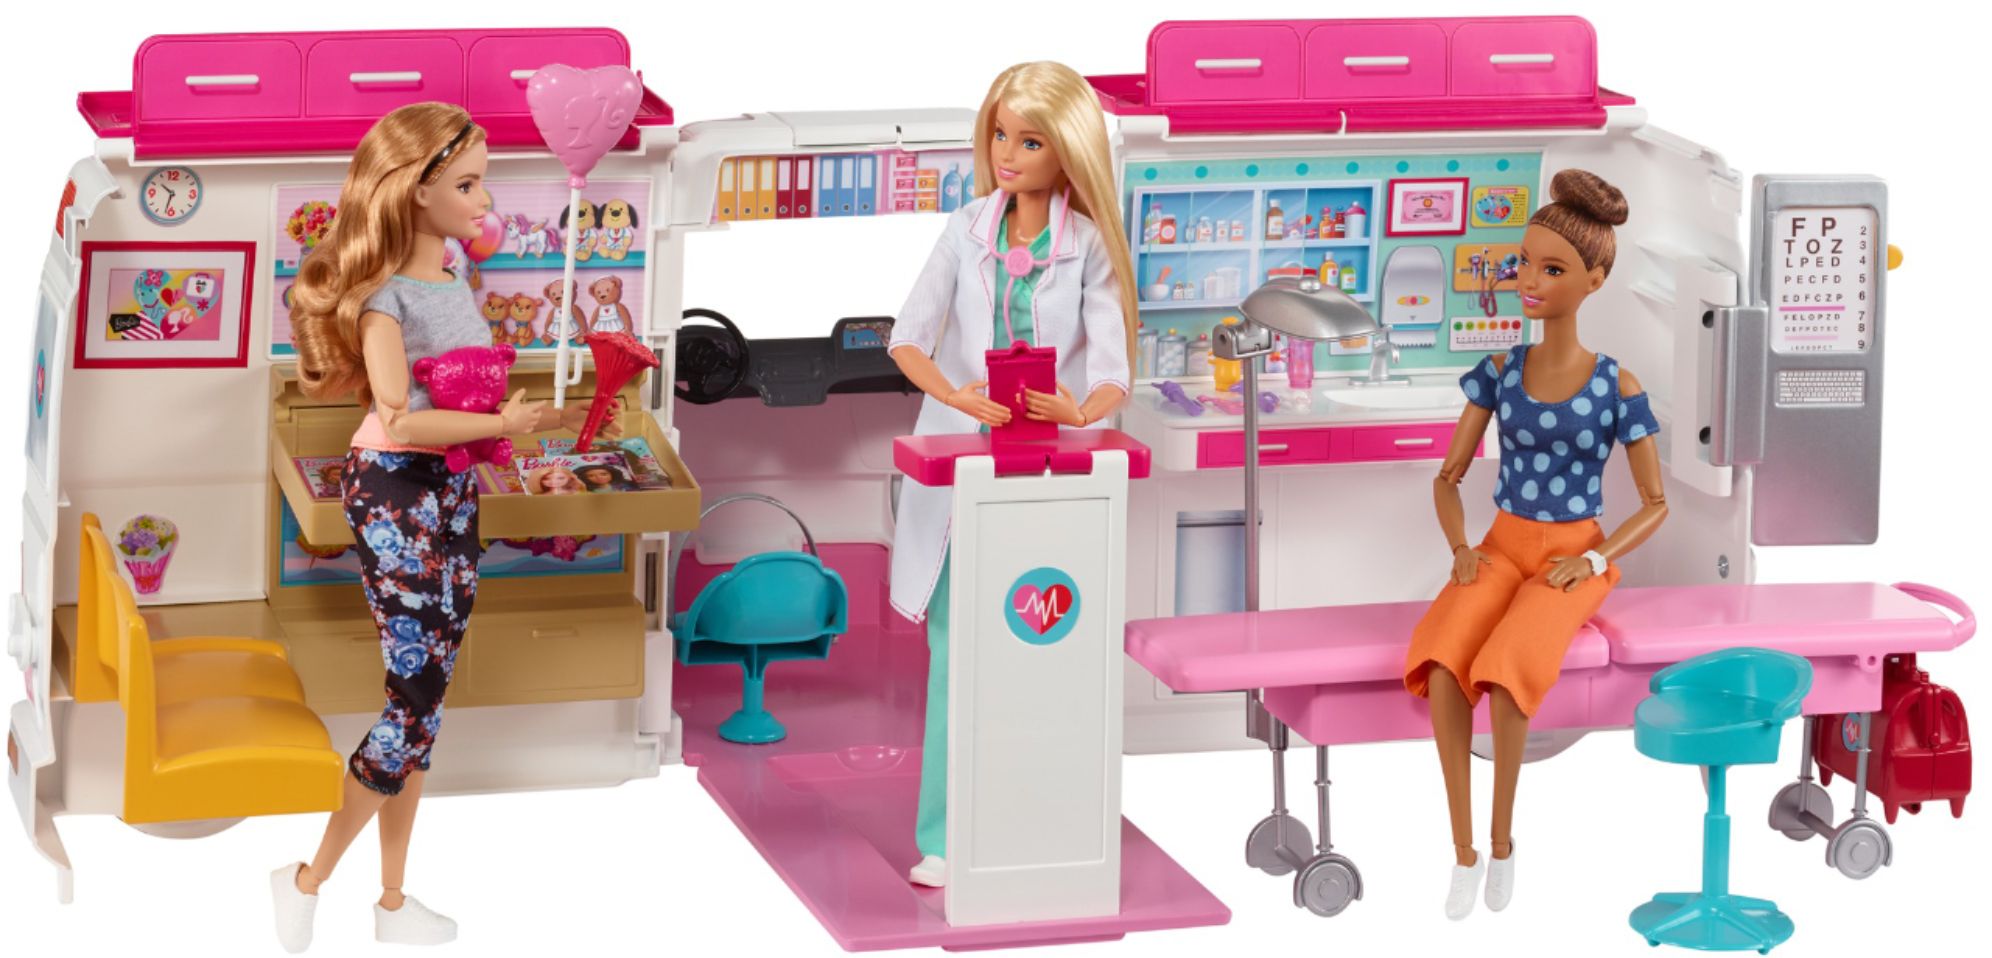 mobile care clinic barbie